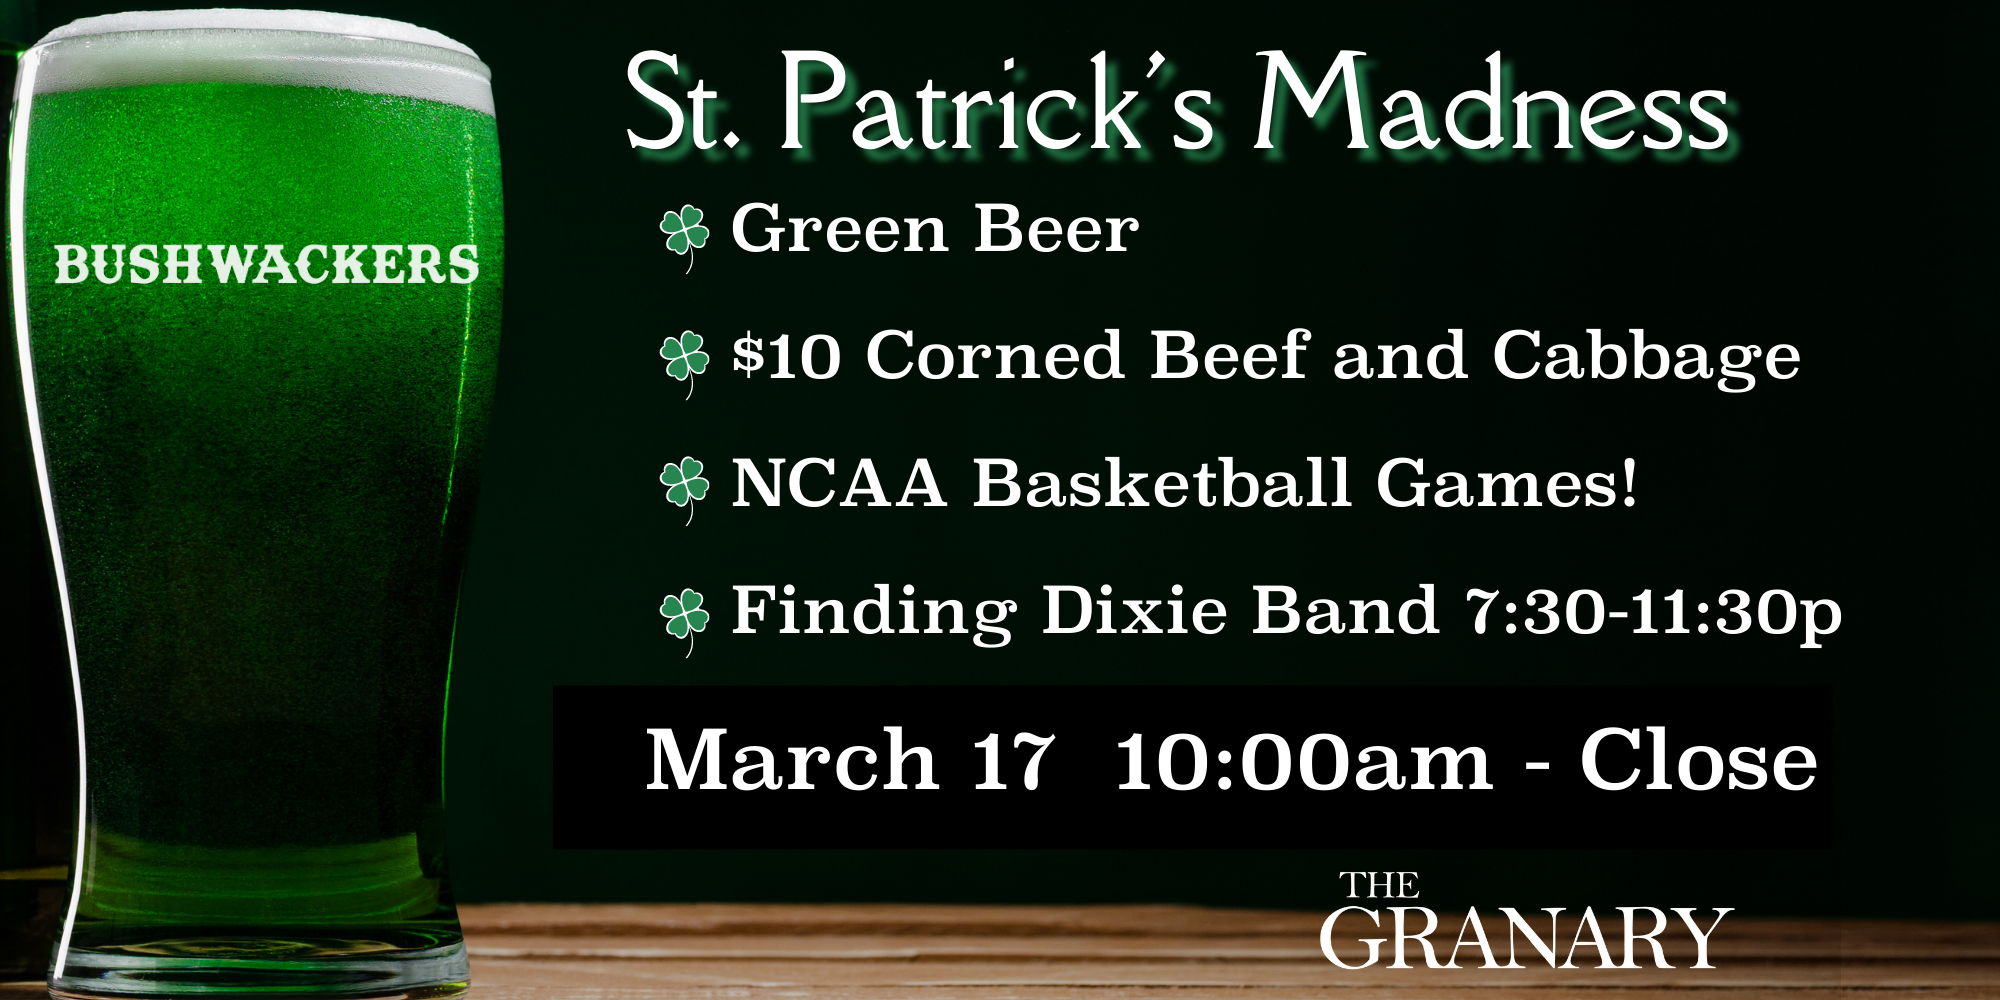 St. Patrick's Madness promotional image